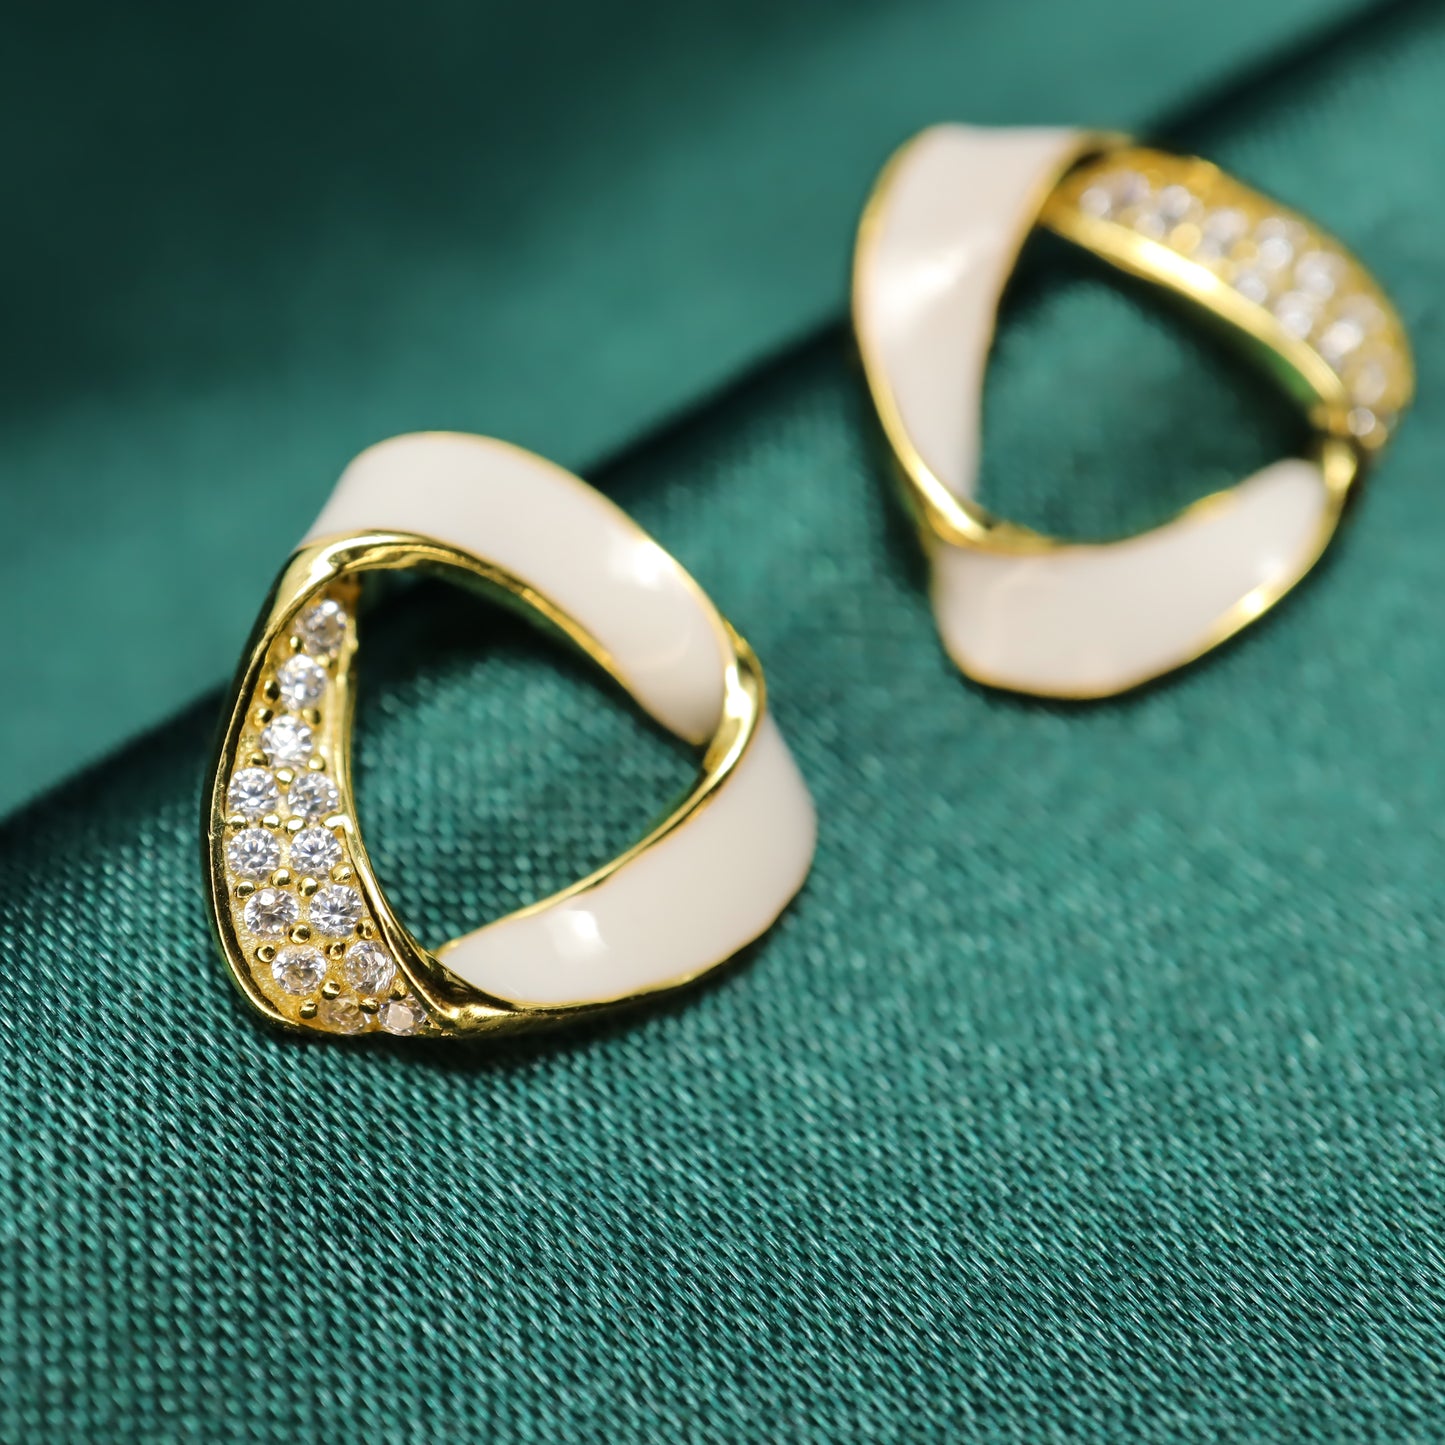 Elegant Triangle - S925 Sterling Silver & French Enamel Paint Stud Earrings